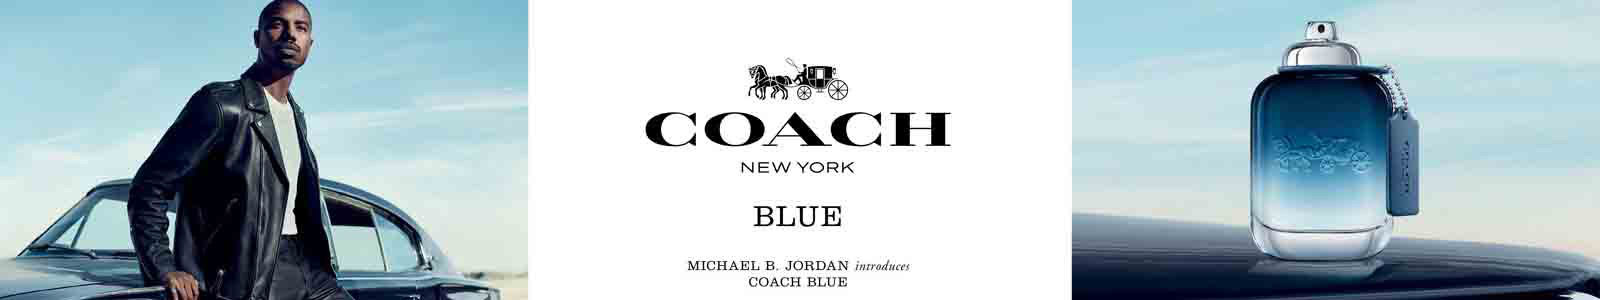 Coach, New York, Blue, Michael B Jordan, Coach Blue